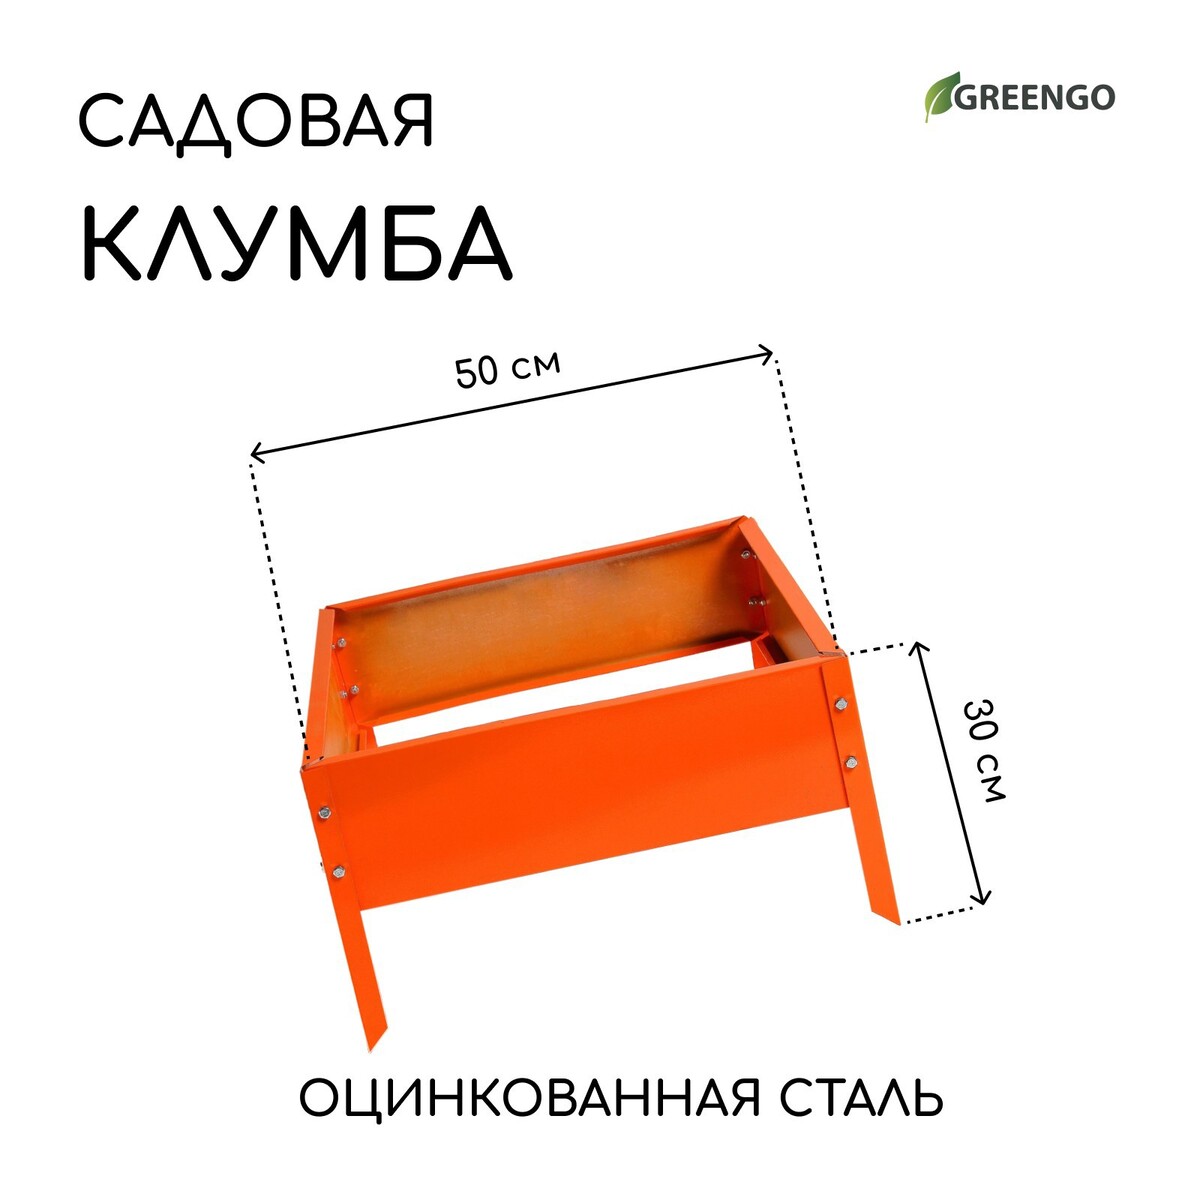 Клумба оцинкованная, 50 × 50 × 15 см, оранжевая,